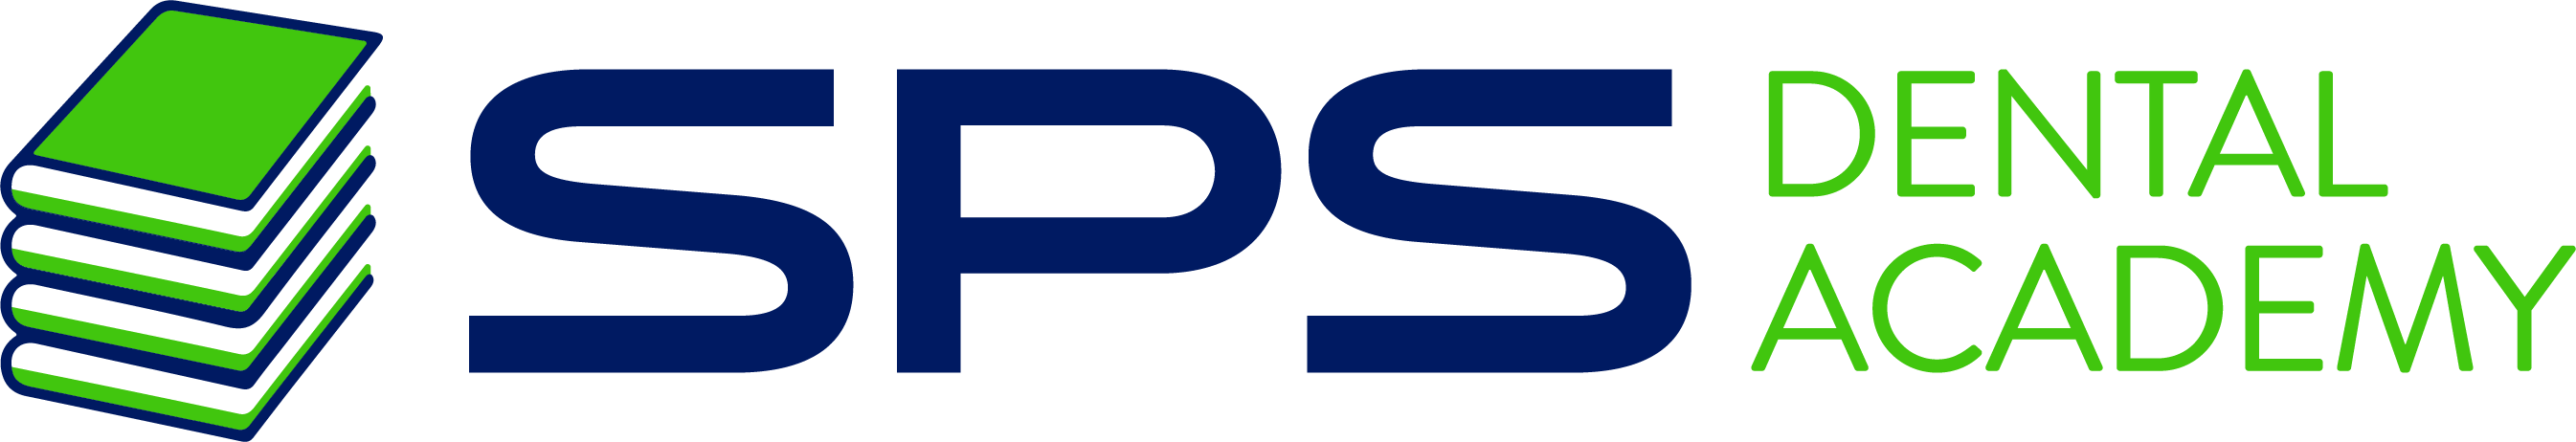 sps dental academy logo